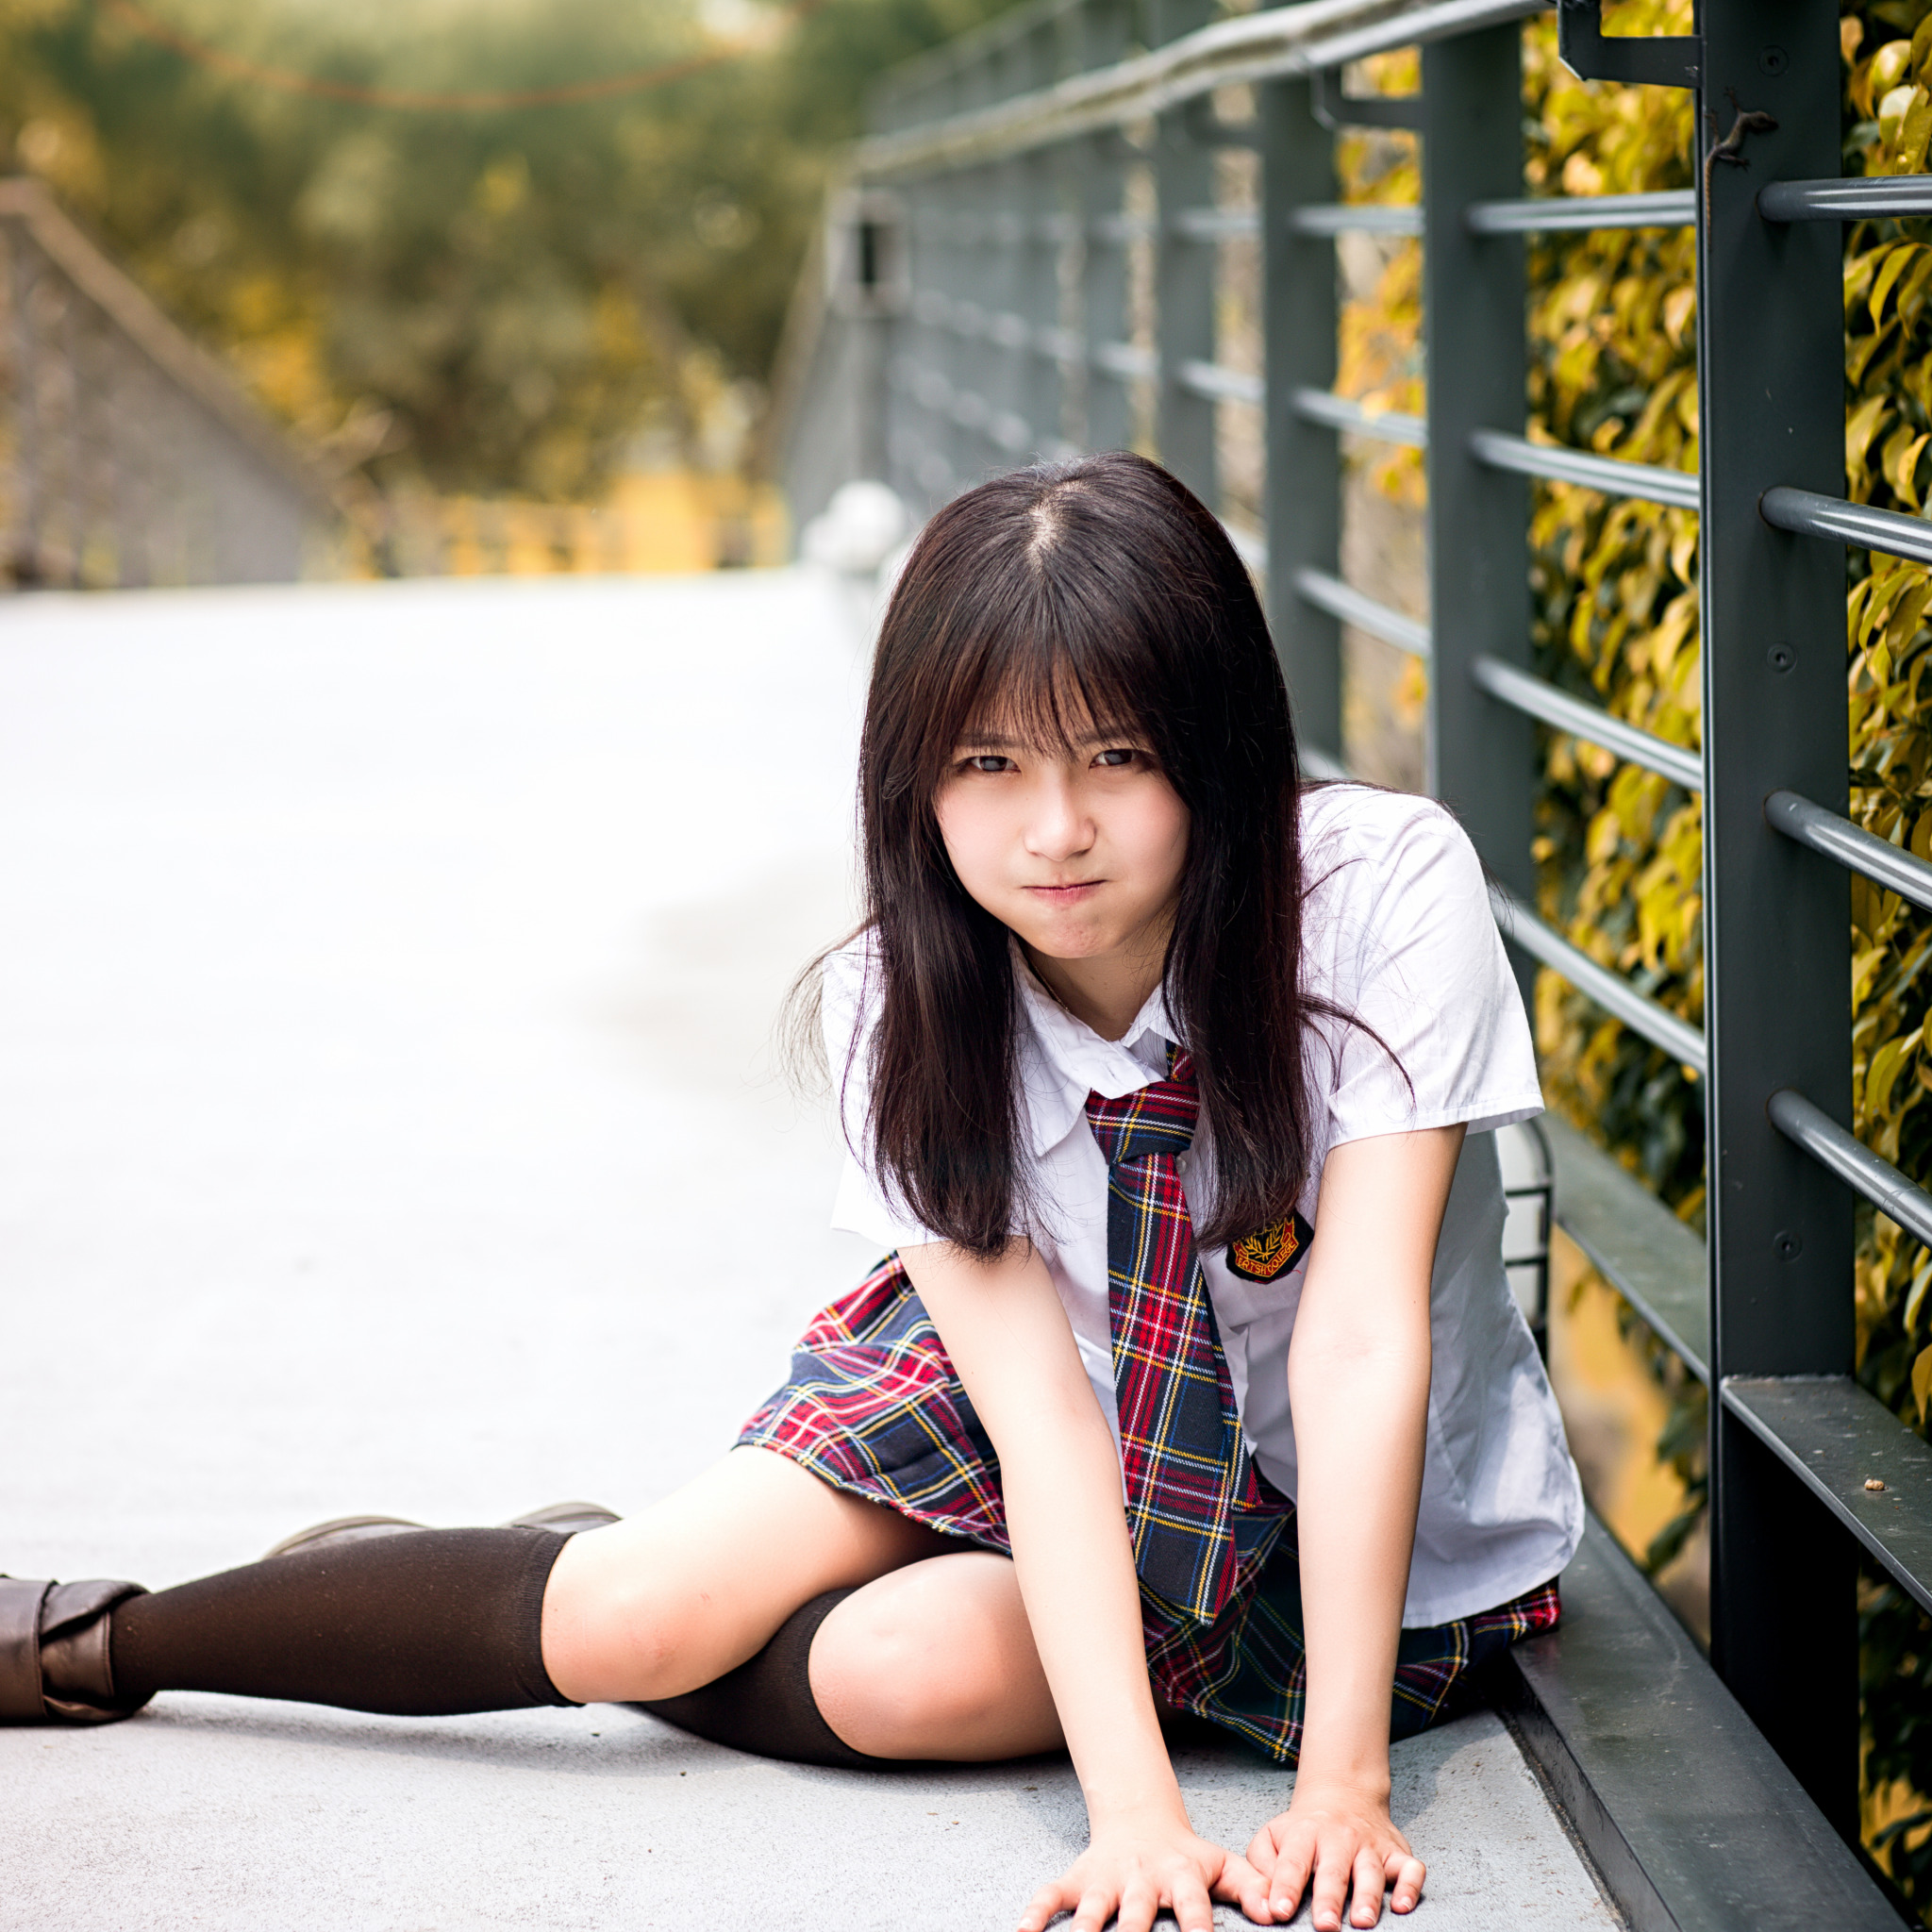 Asian spanked dominant schoolgirl best adult free image